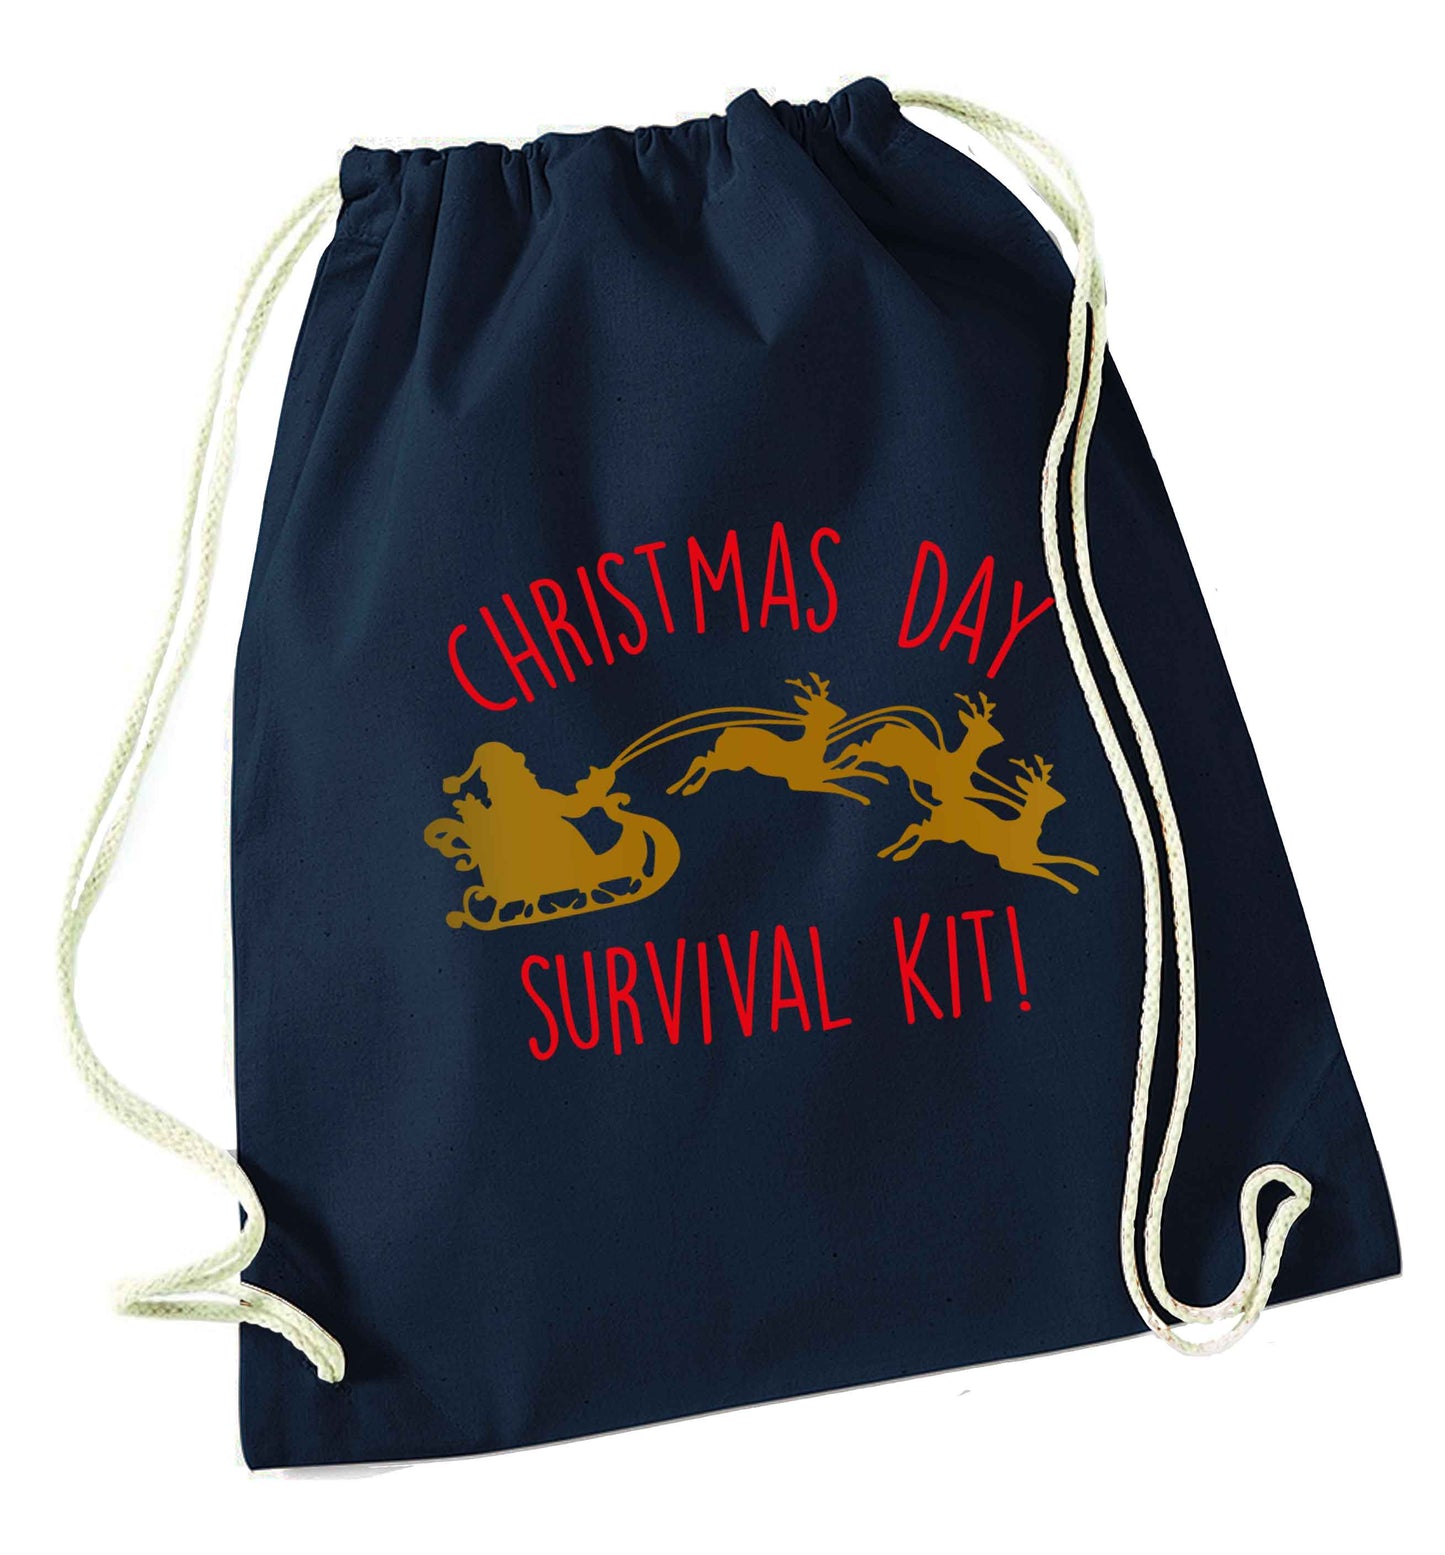 Christmas Day Survival Kitnavy drawstring bag